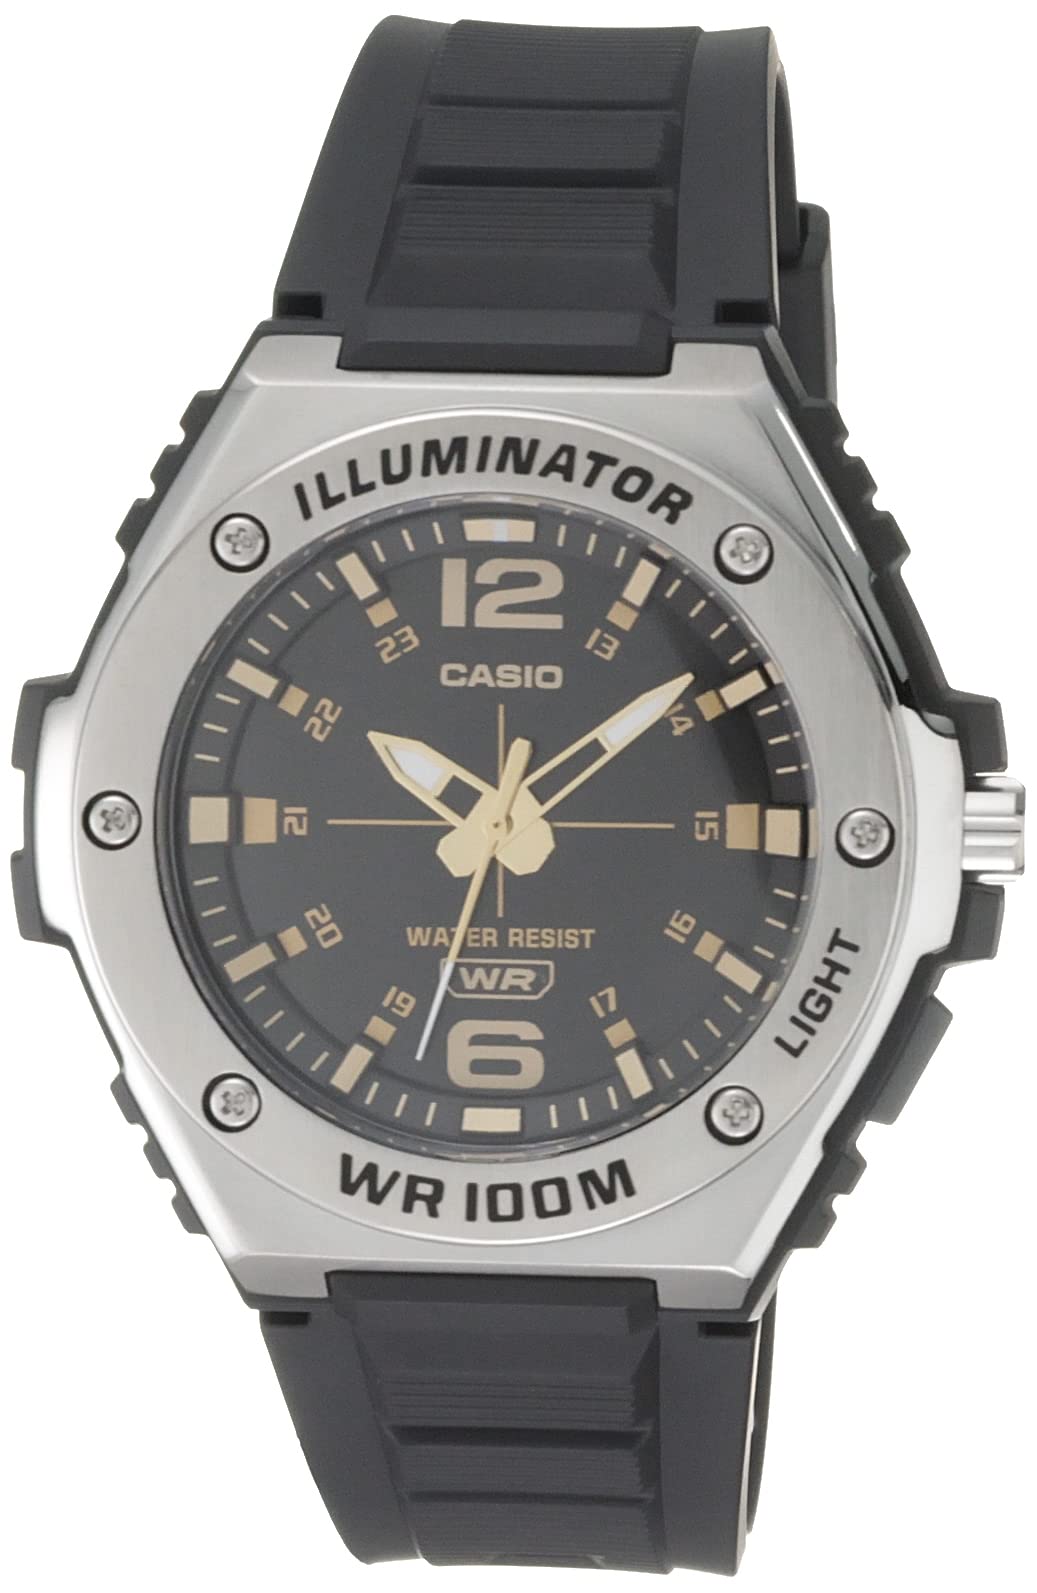 Casio Illuminator Men's Quartz Sport Watch with Black Resin Strap Heavy Duty Metal Bezel Model: MWA100H-1A2V Silver-Tone